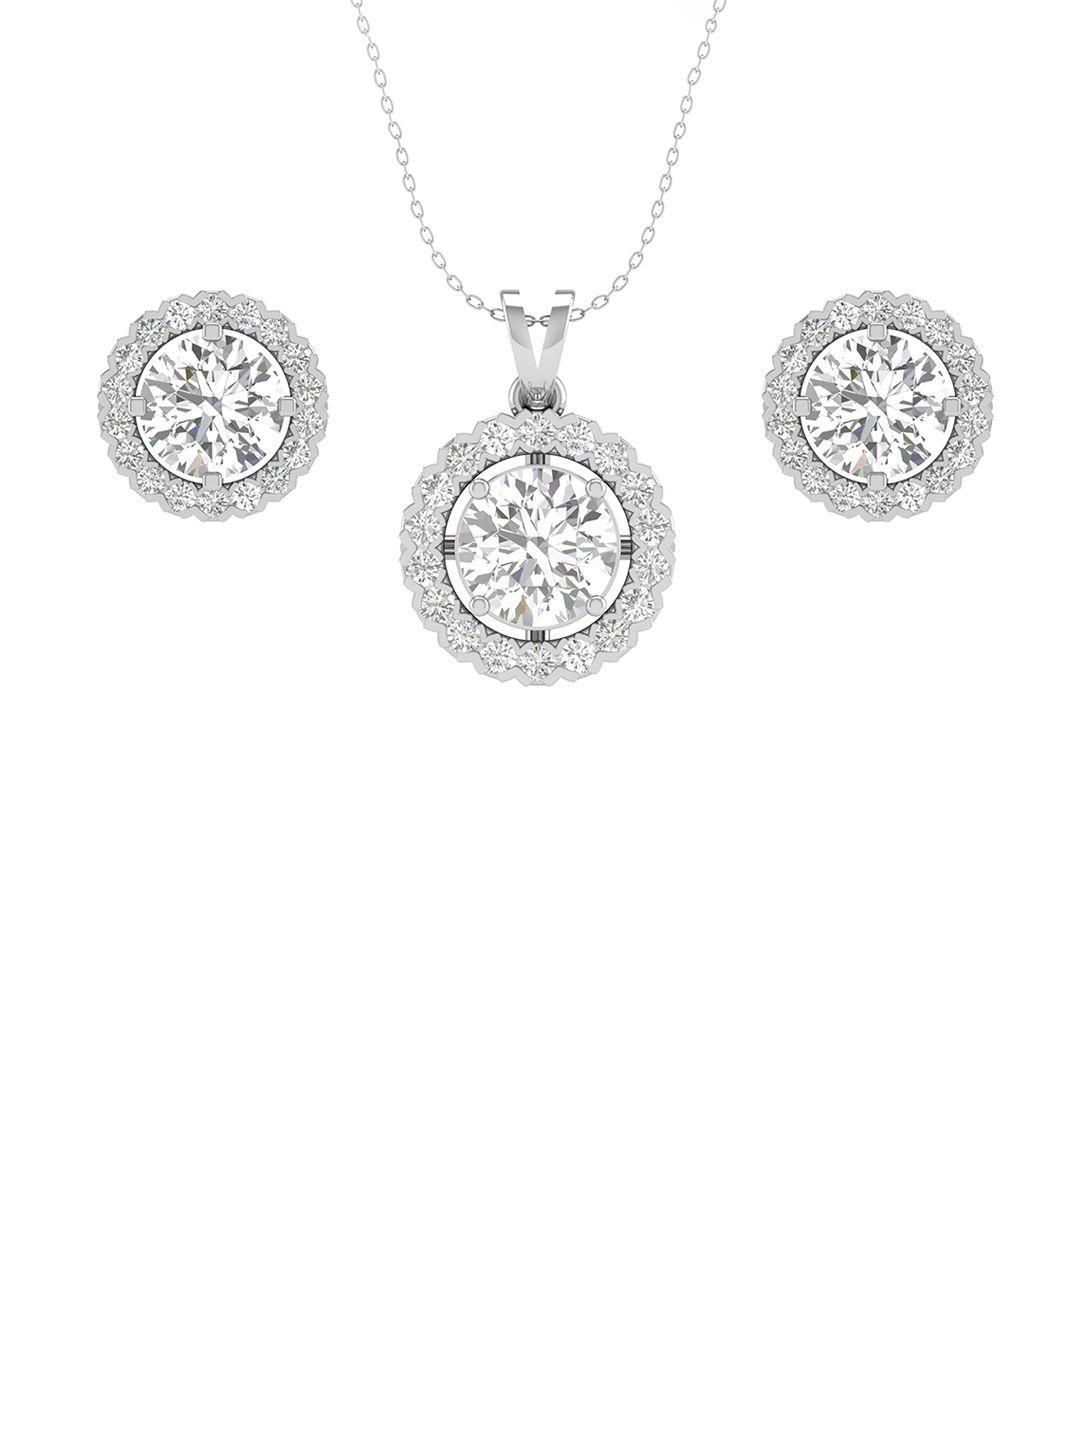 orionz 92.5 sterling silver cz-studded jewellery set